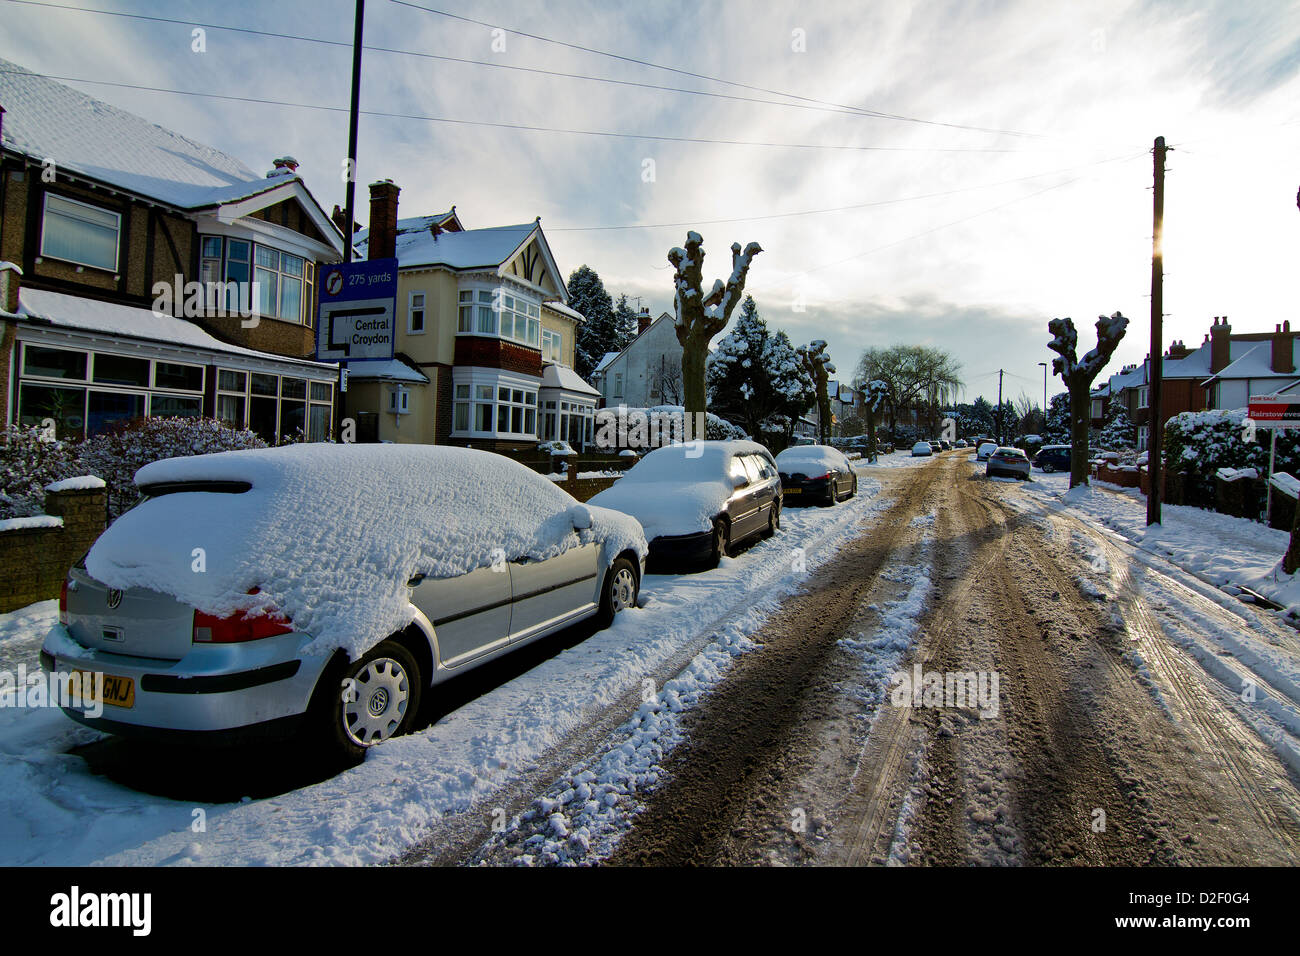 Winter snow scene of suburban street in Croydon, South London, United Kingdom Stock Photo